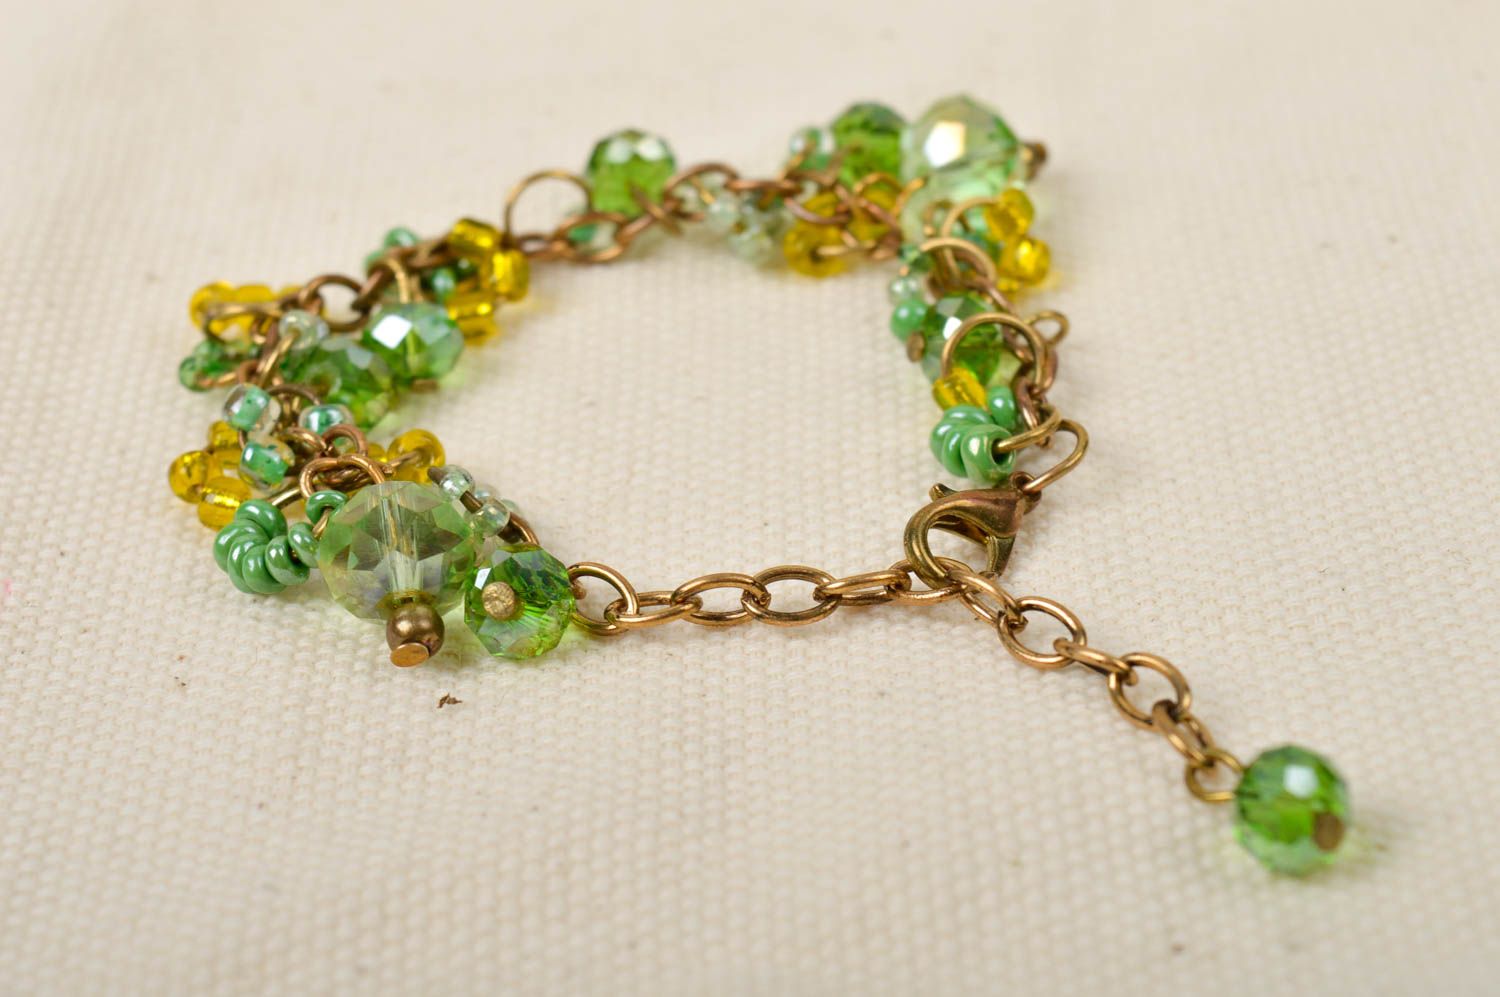 Handmade elegant wrist bracelet elegant stylish bracelet designer jewelry photo 1